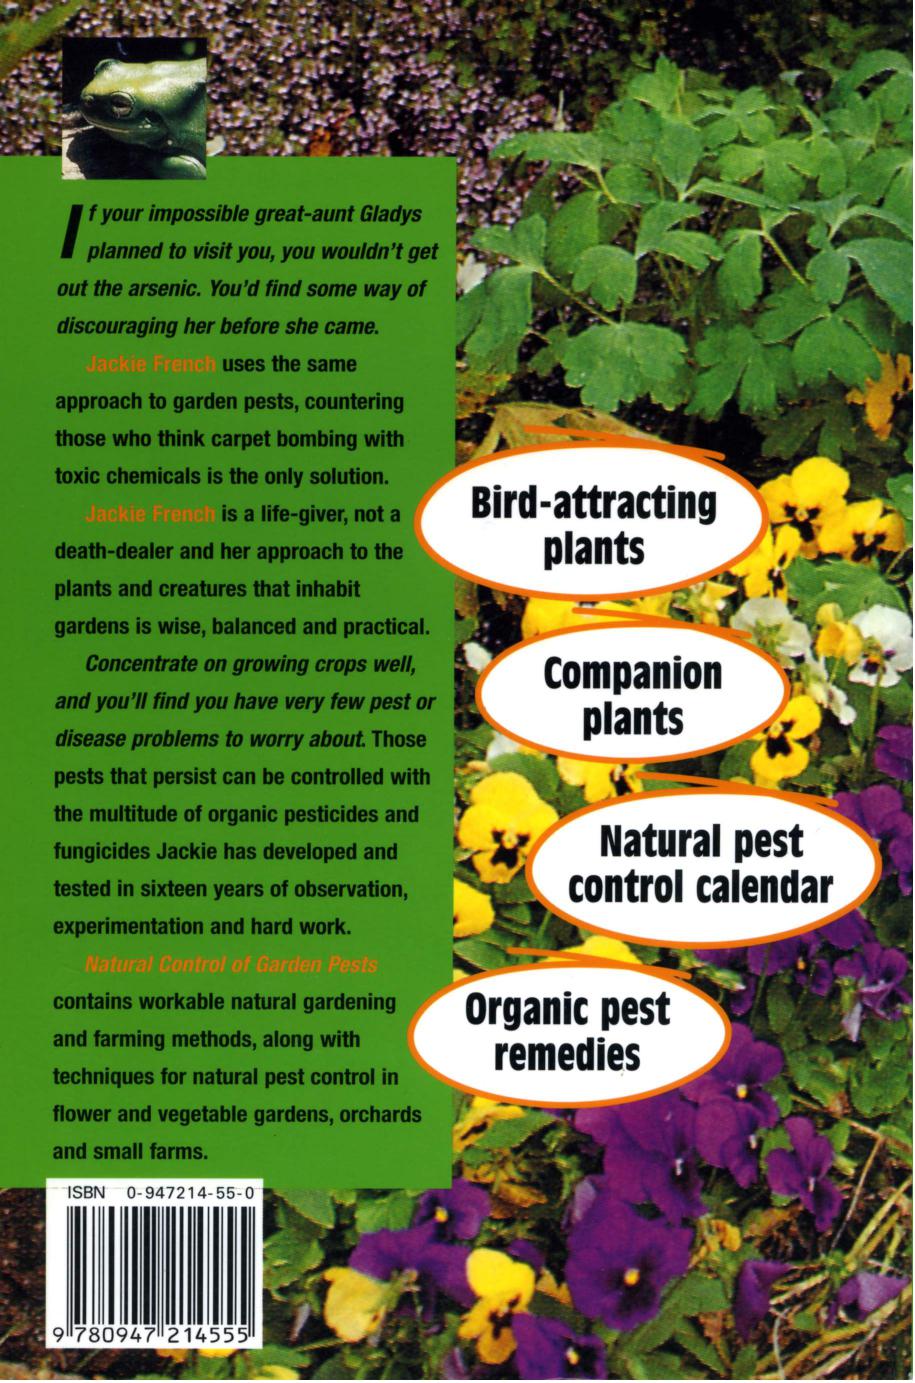 Natural Control of Garden Pest